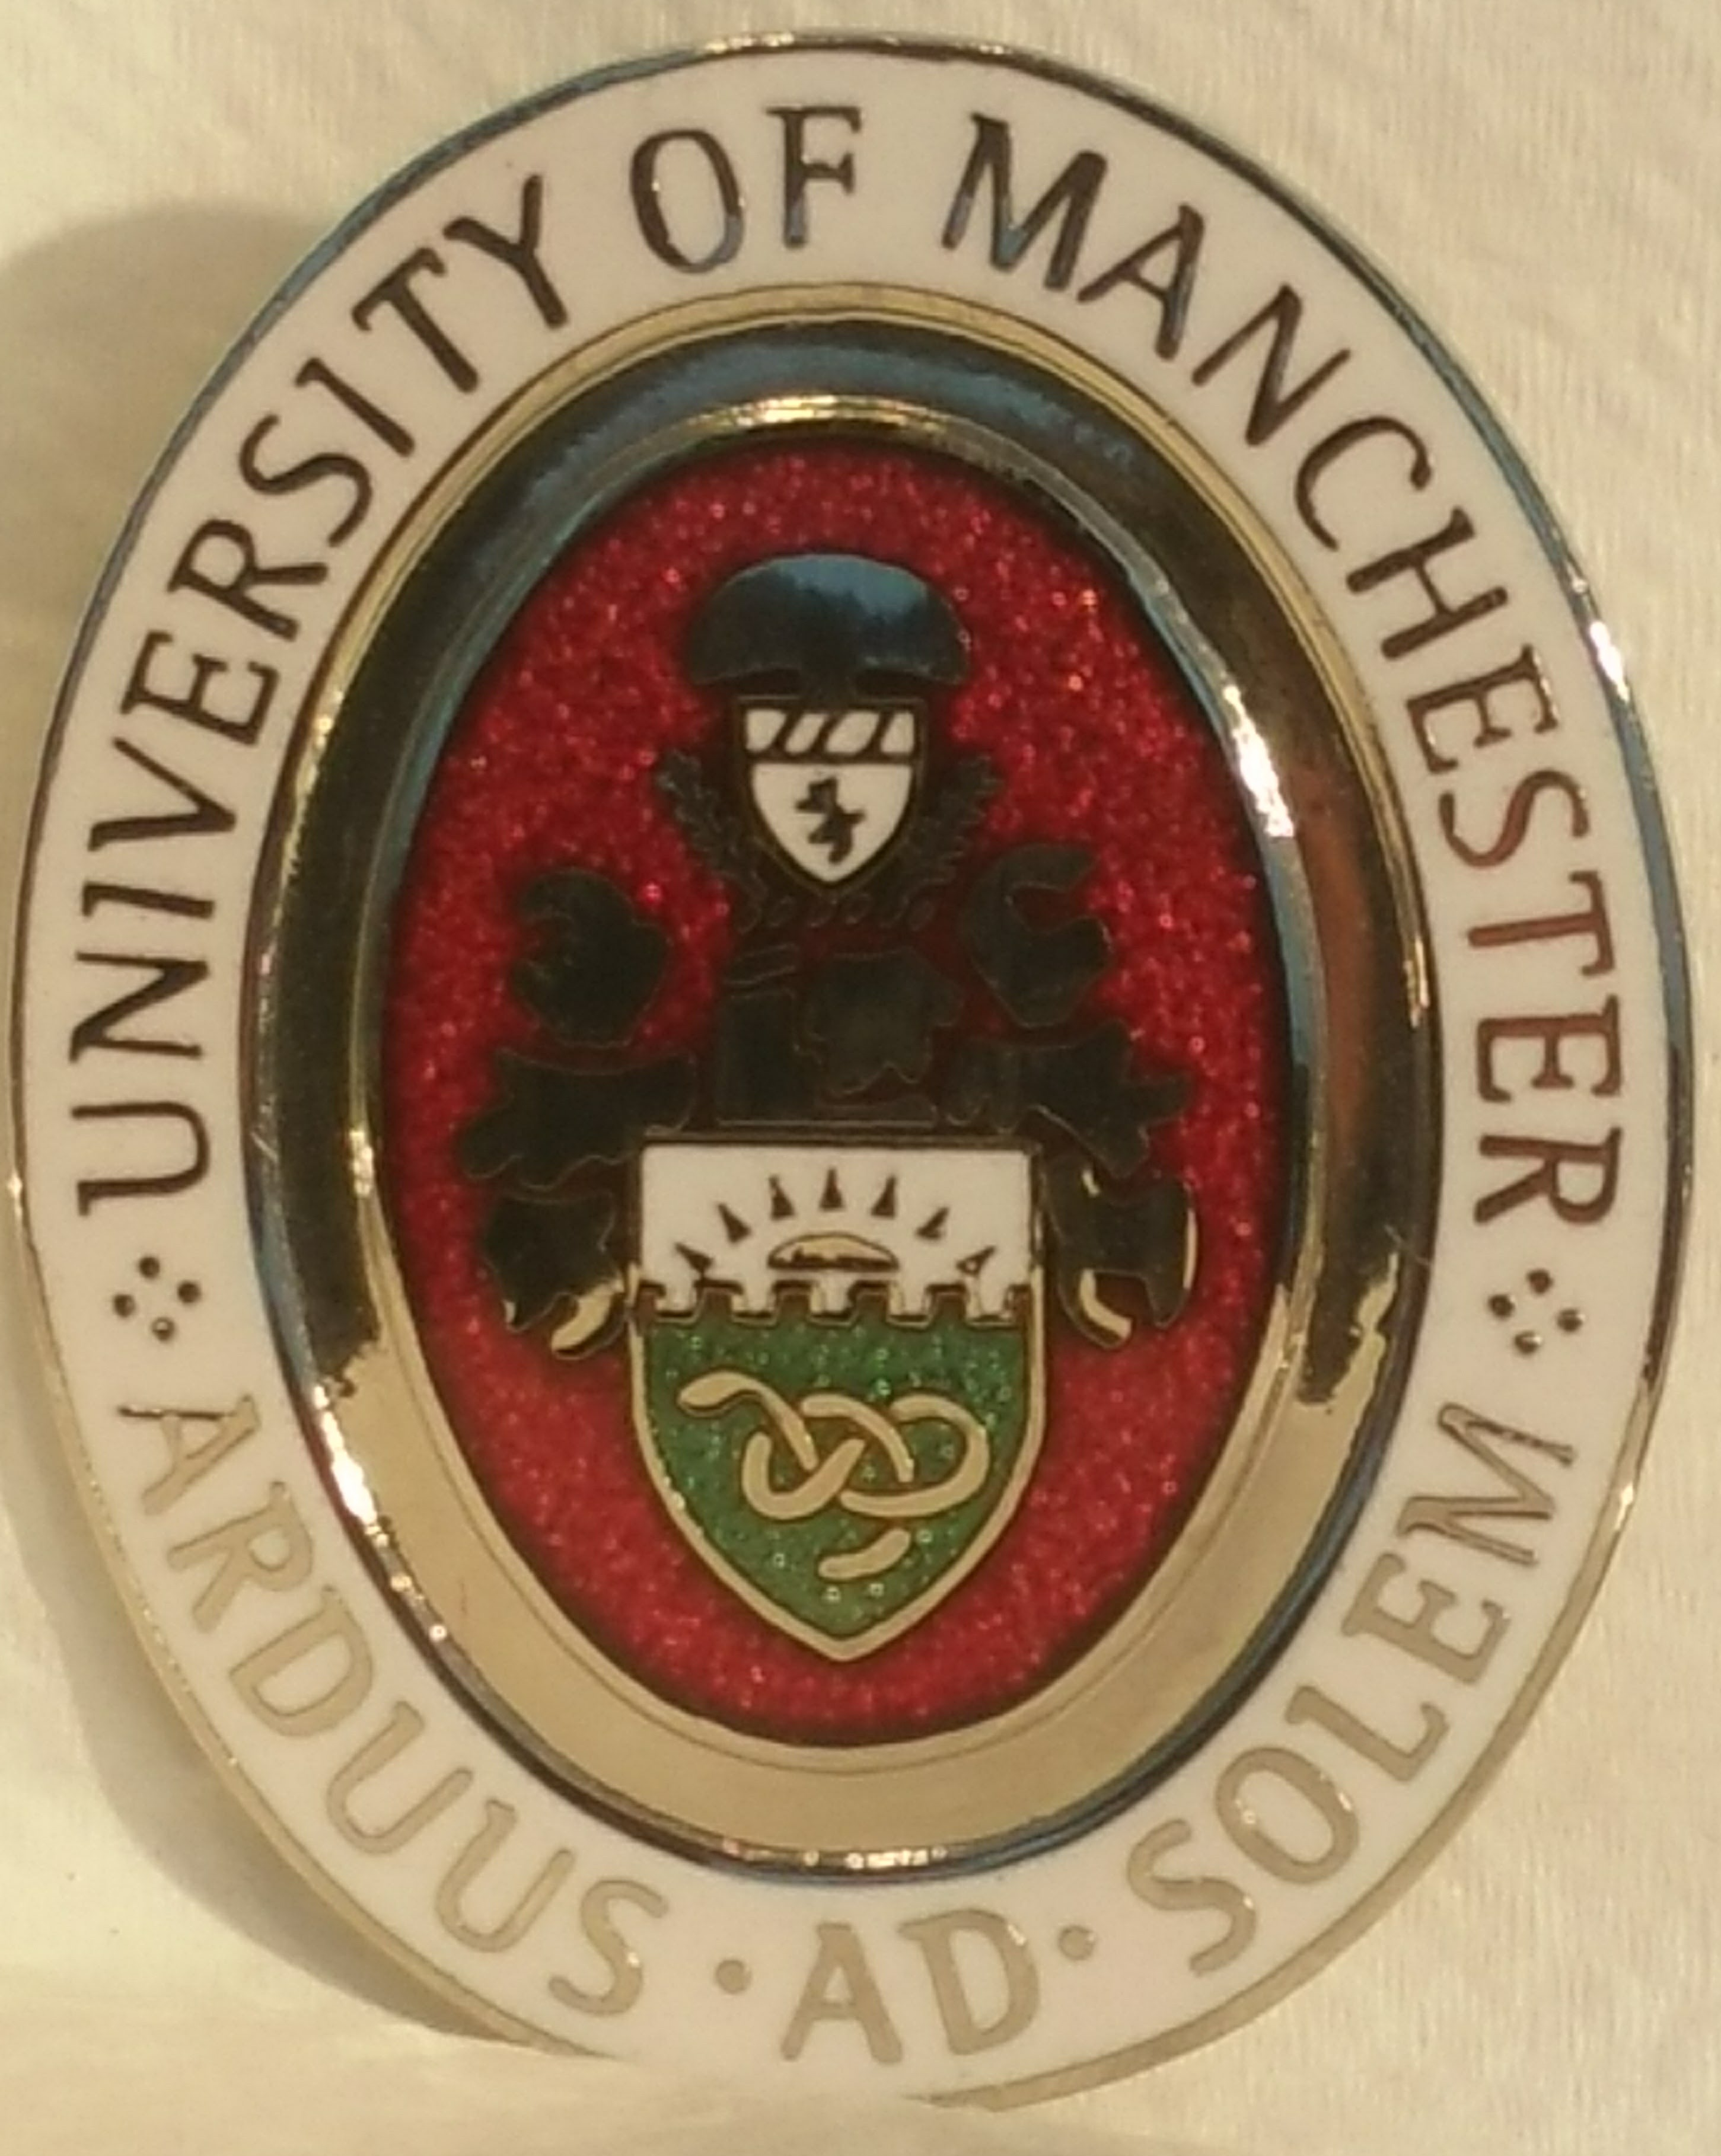 University of Manchester-white